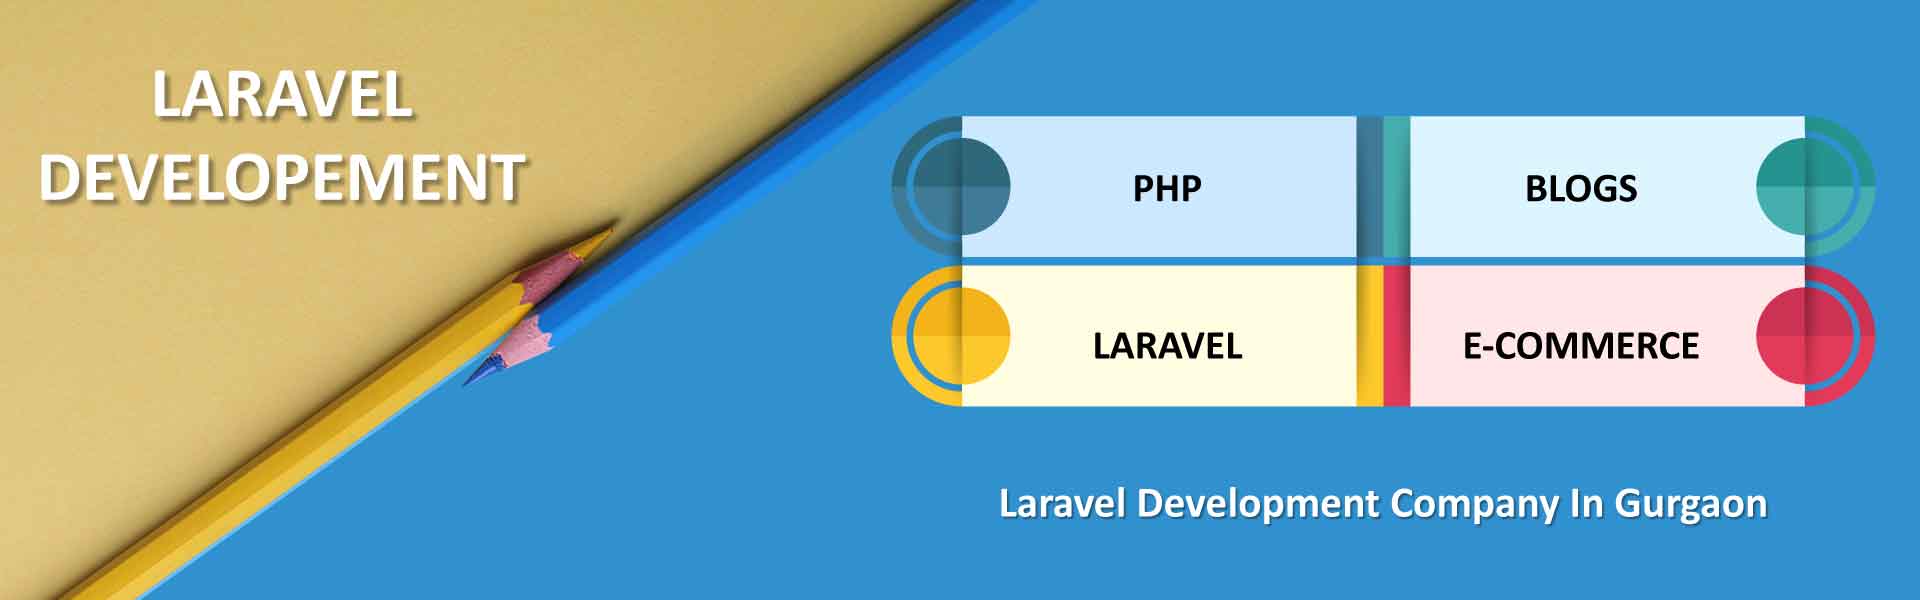 Laravel Development Company in Delhi